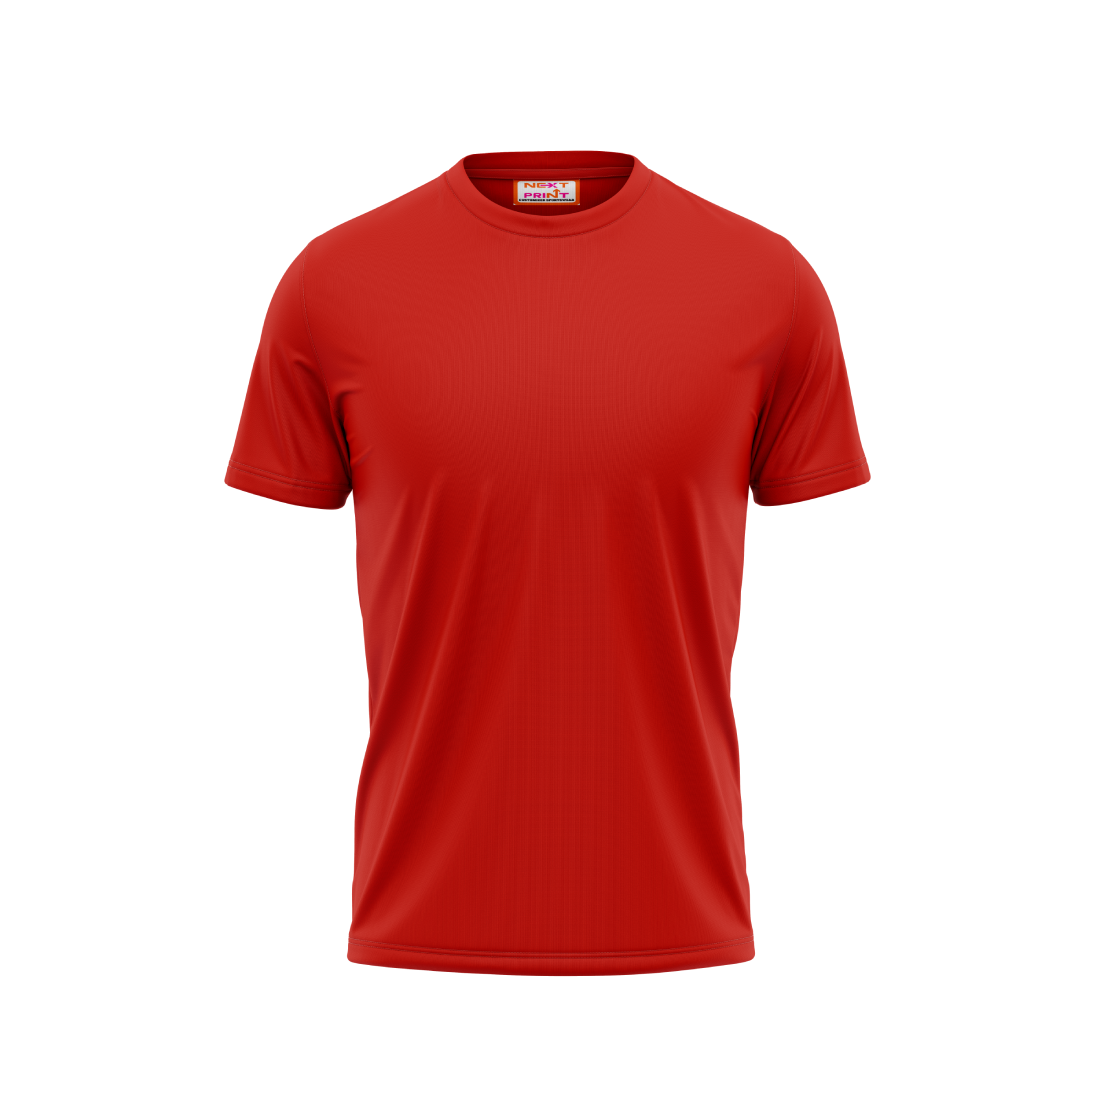 Plain Roundneck Red Tshirt